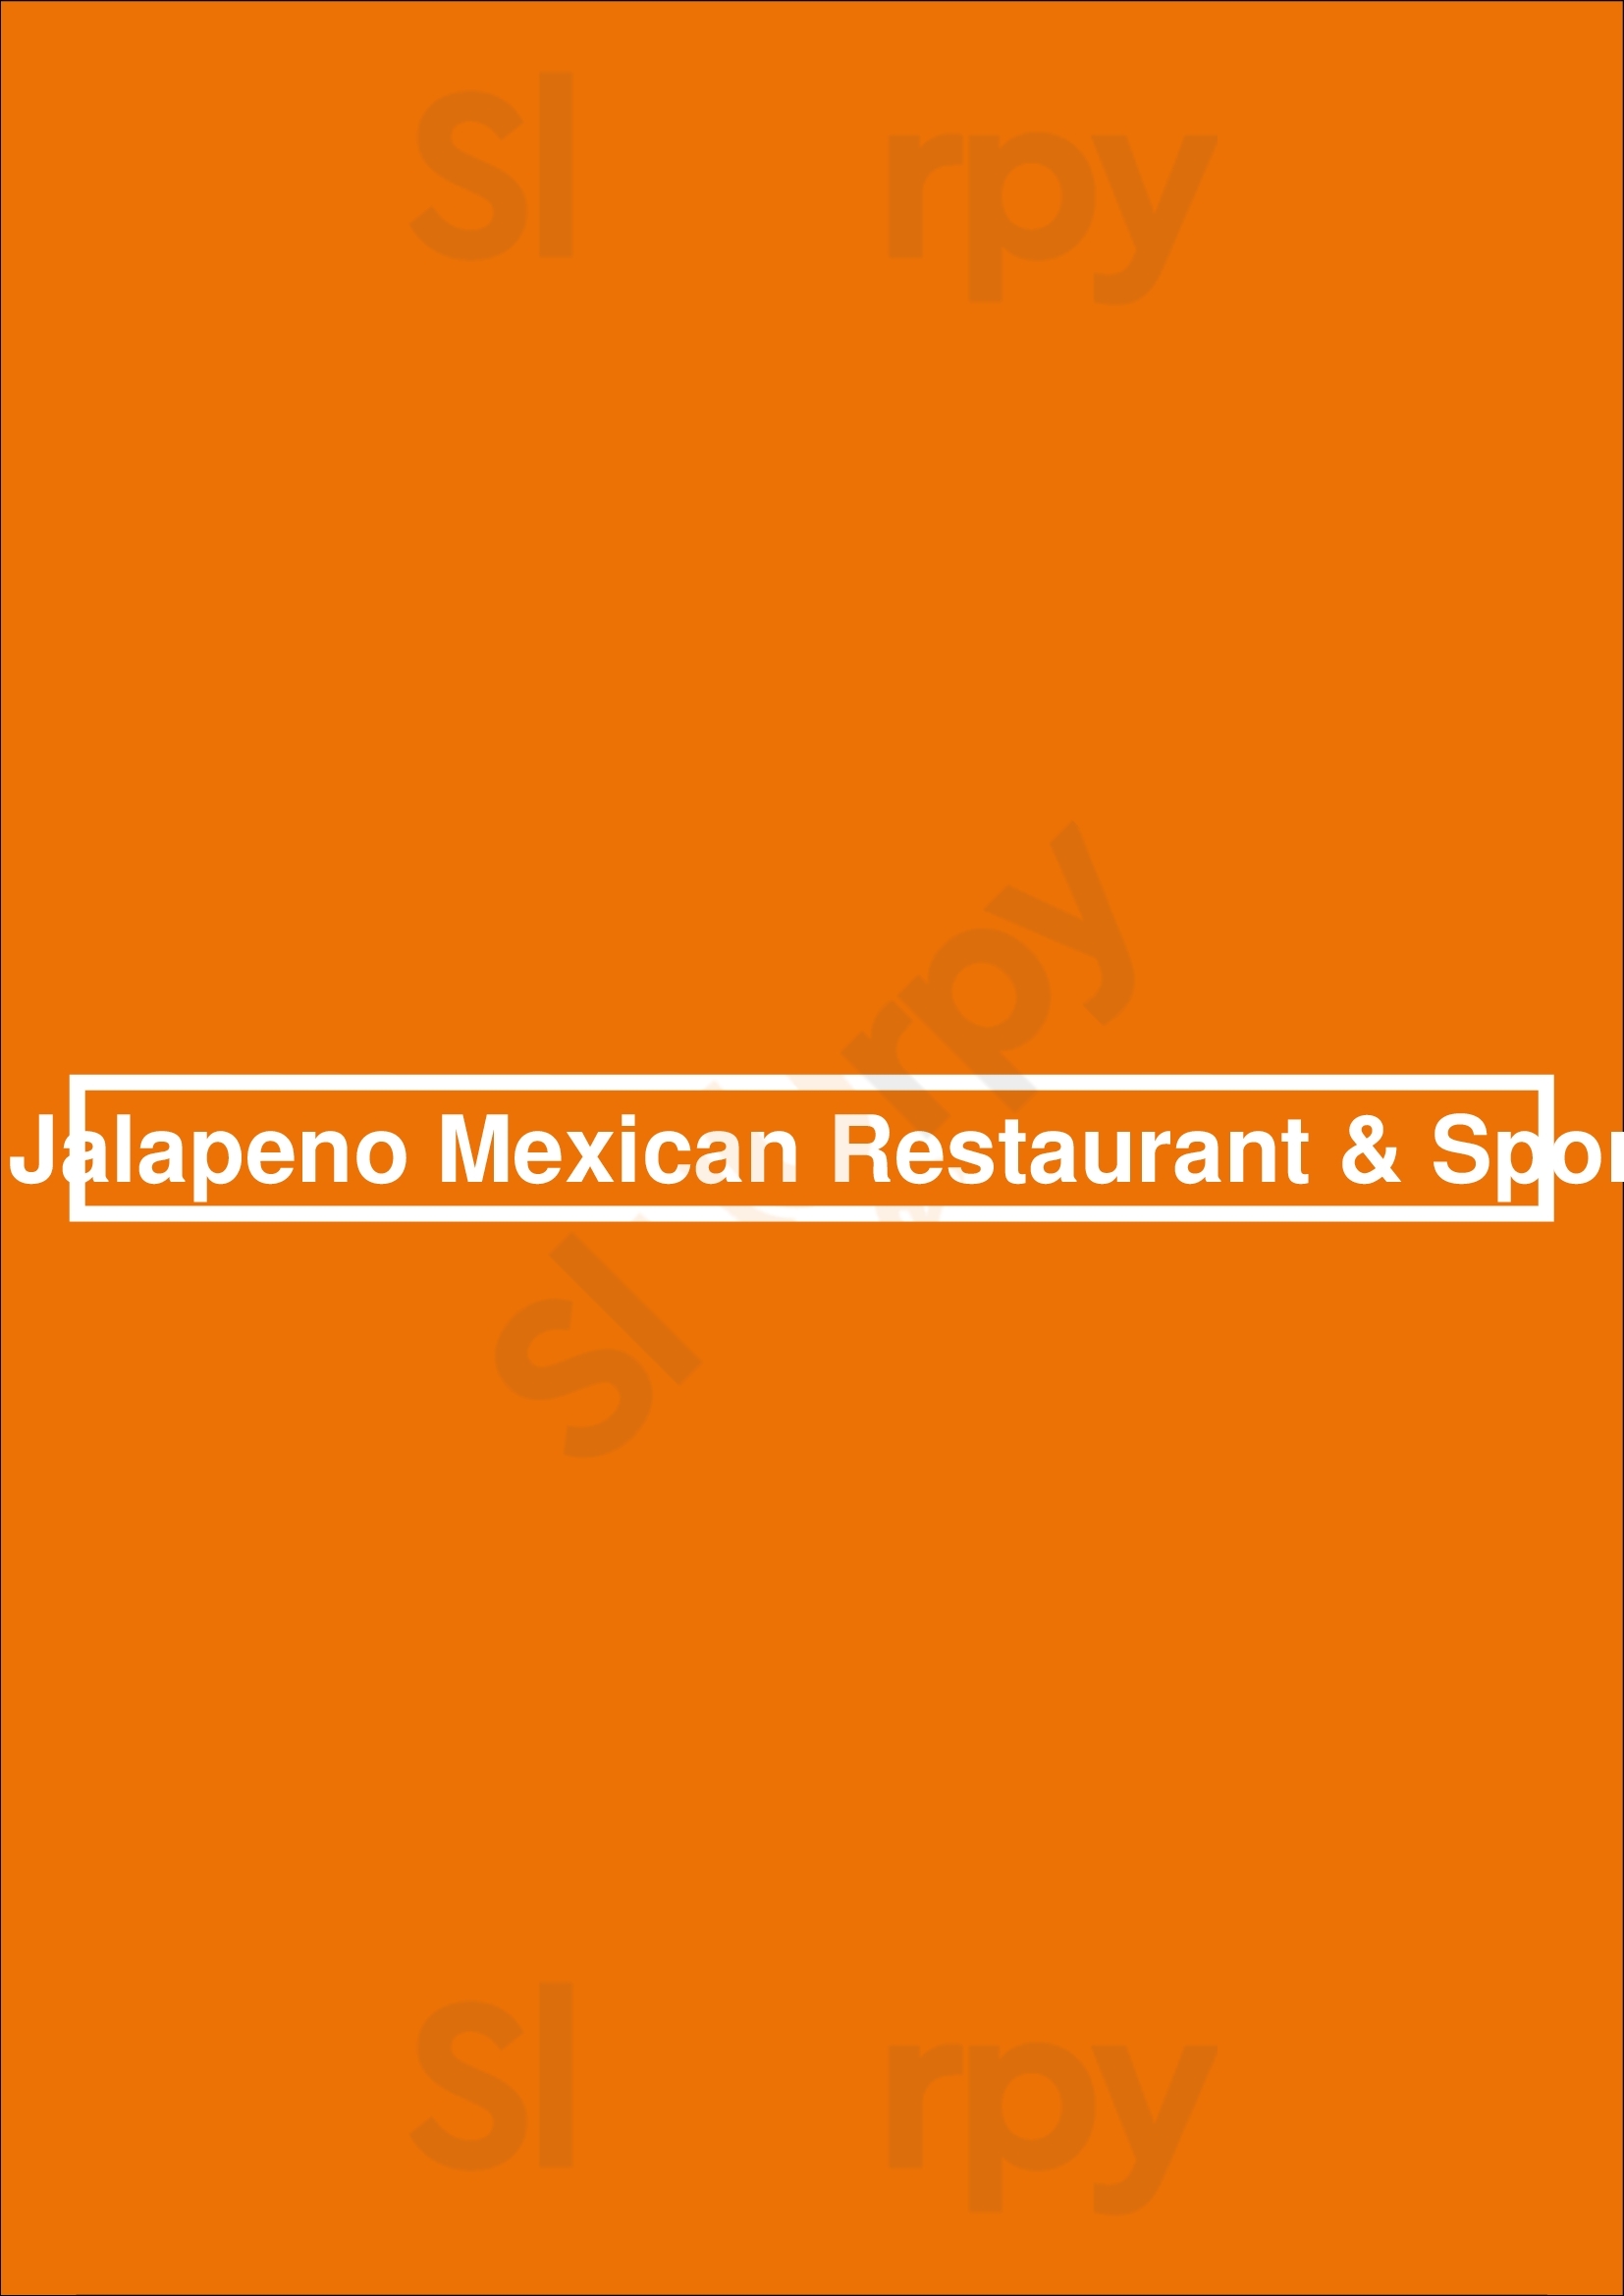 Senor Jalapeno Mexican Restaurant & Sports Bar Avon Park Menu - 1